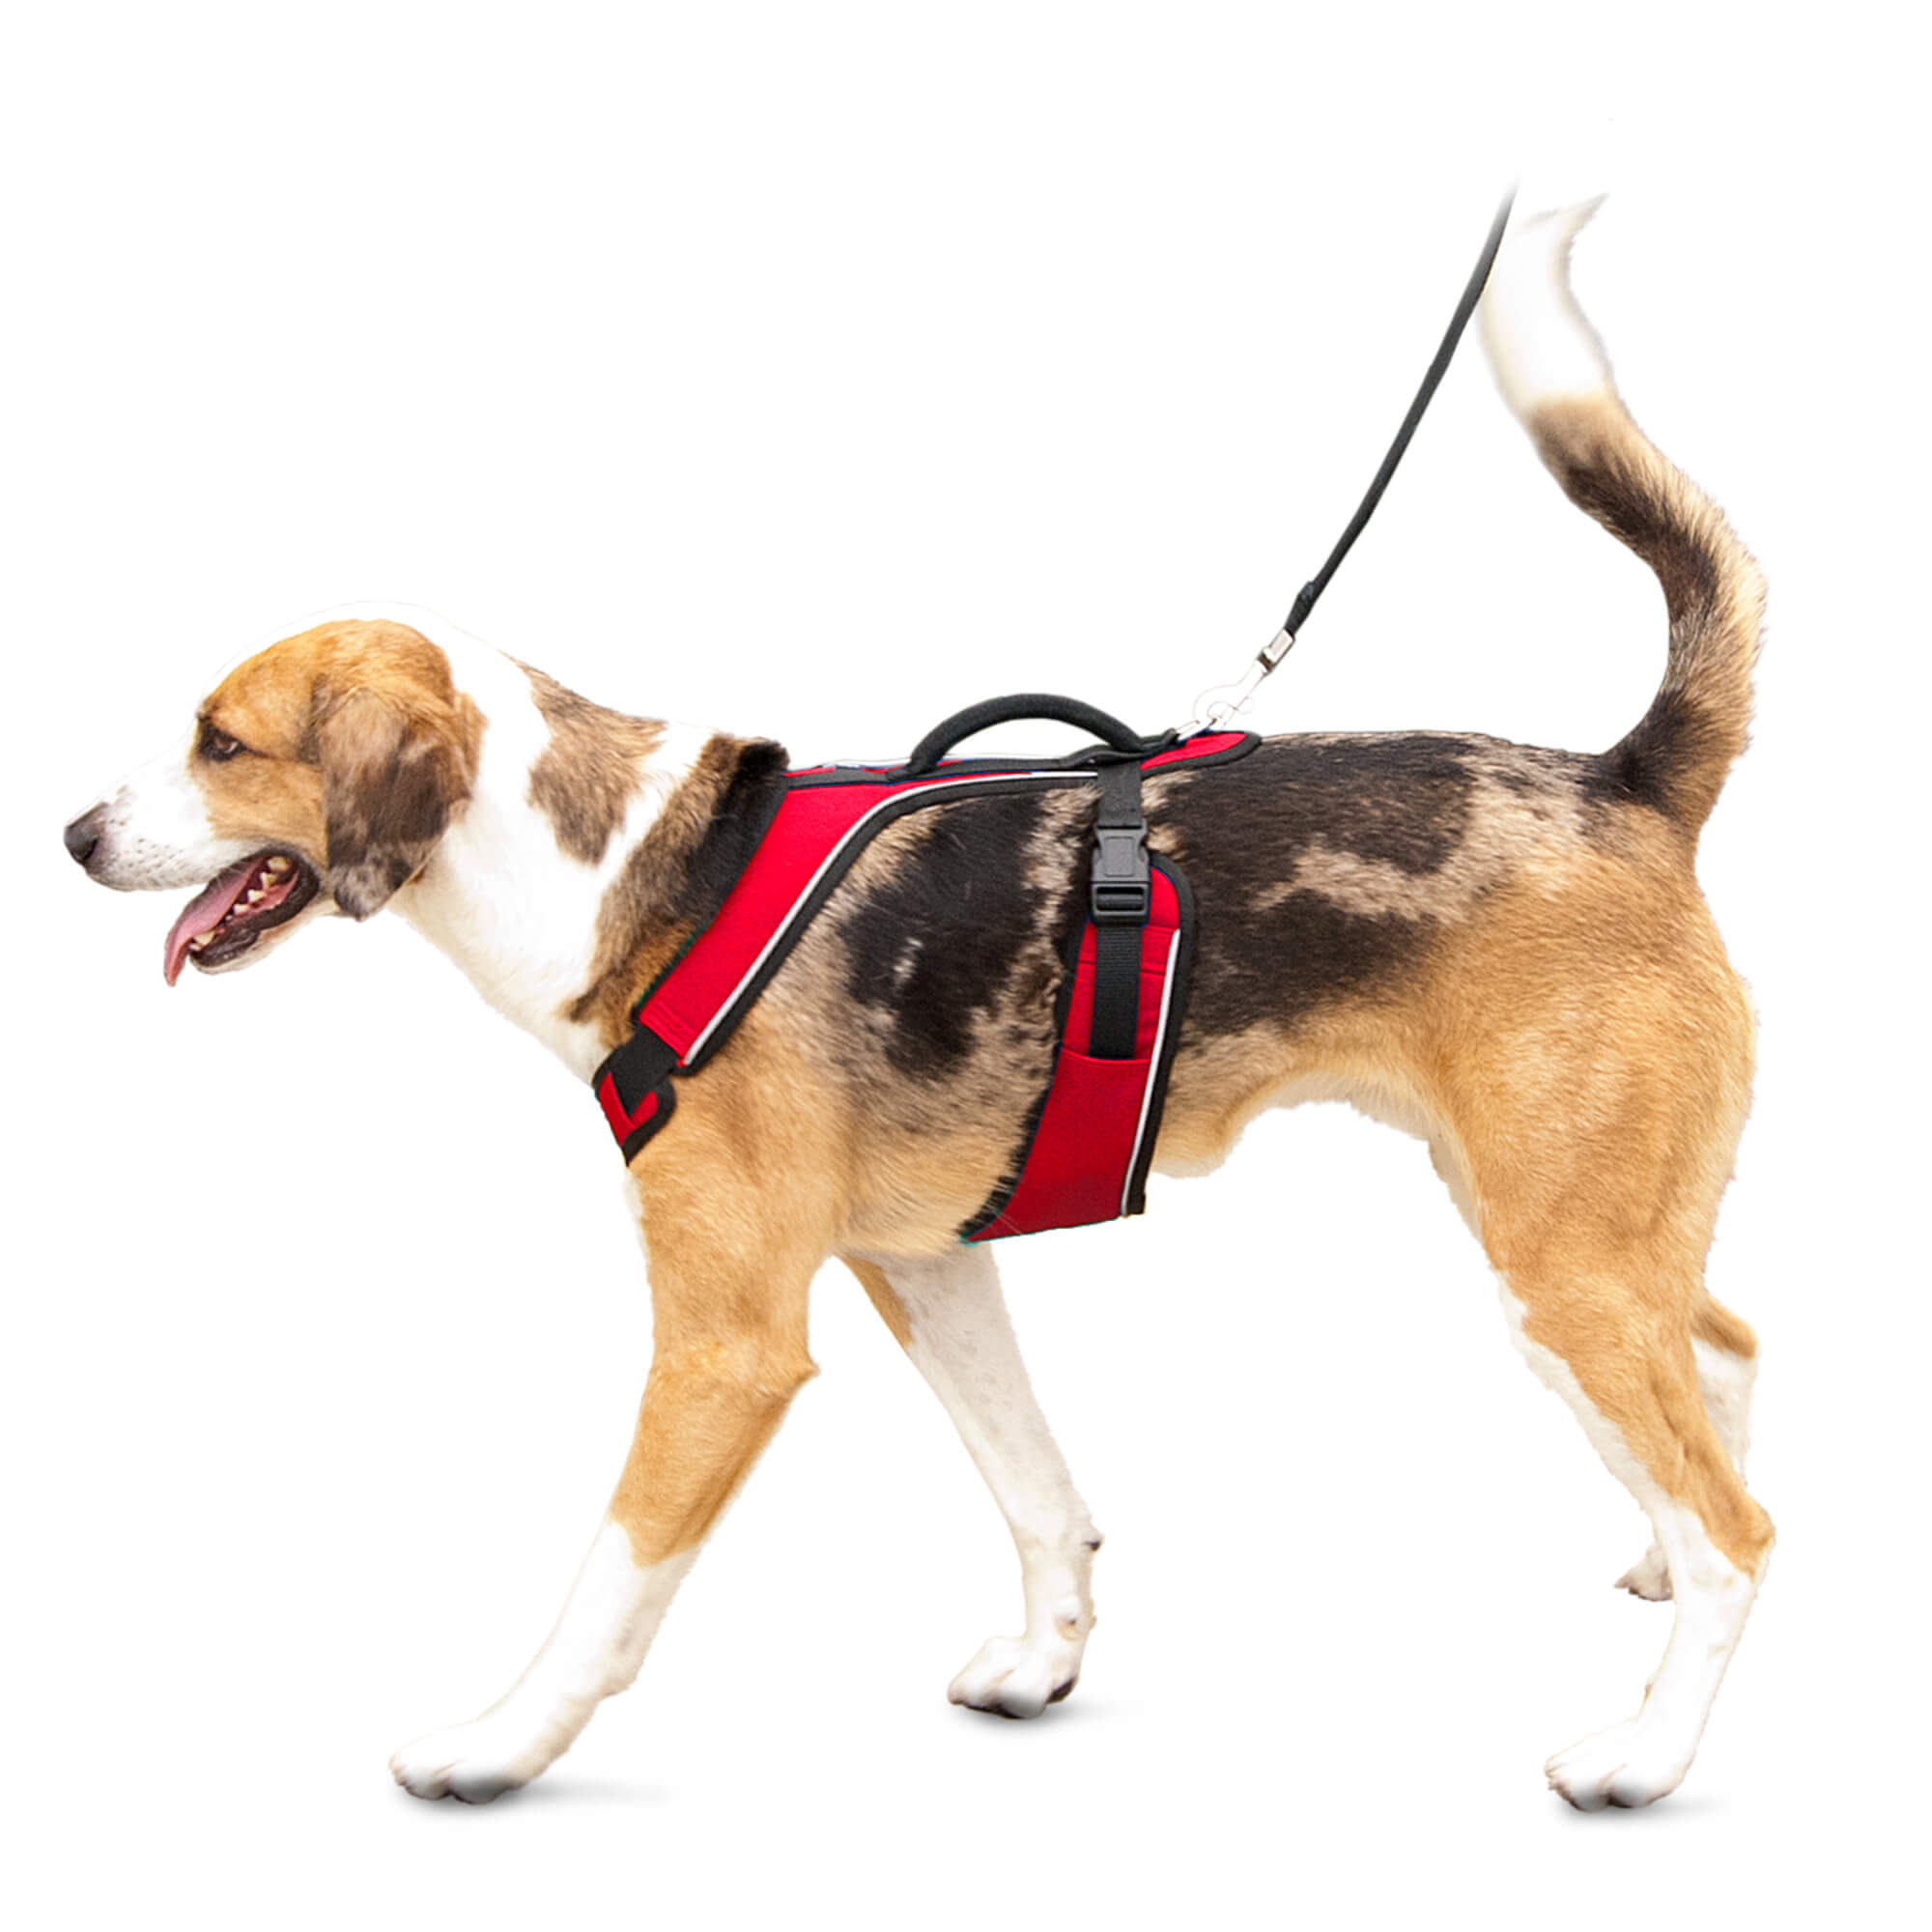 Dog wearing red petsafe easysport harness in large